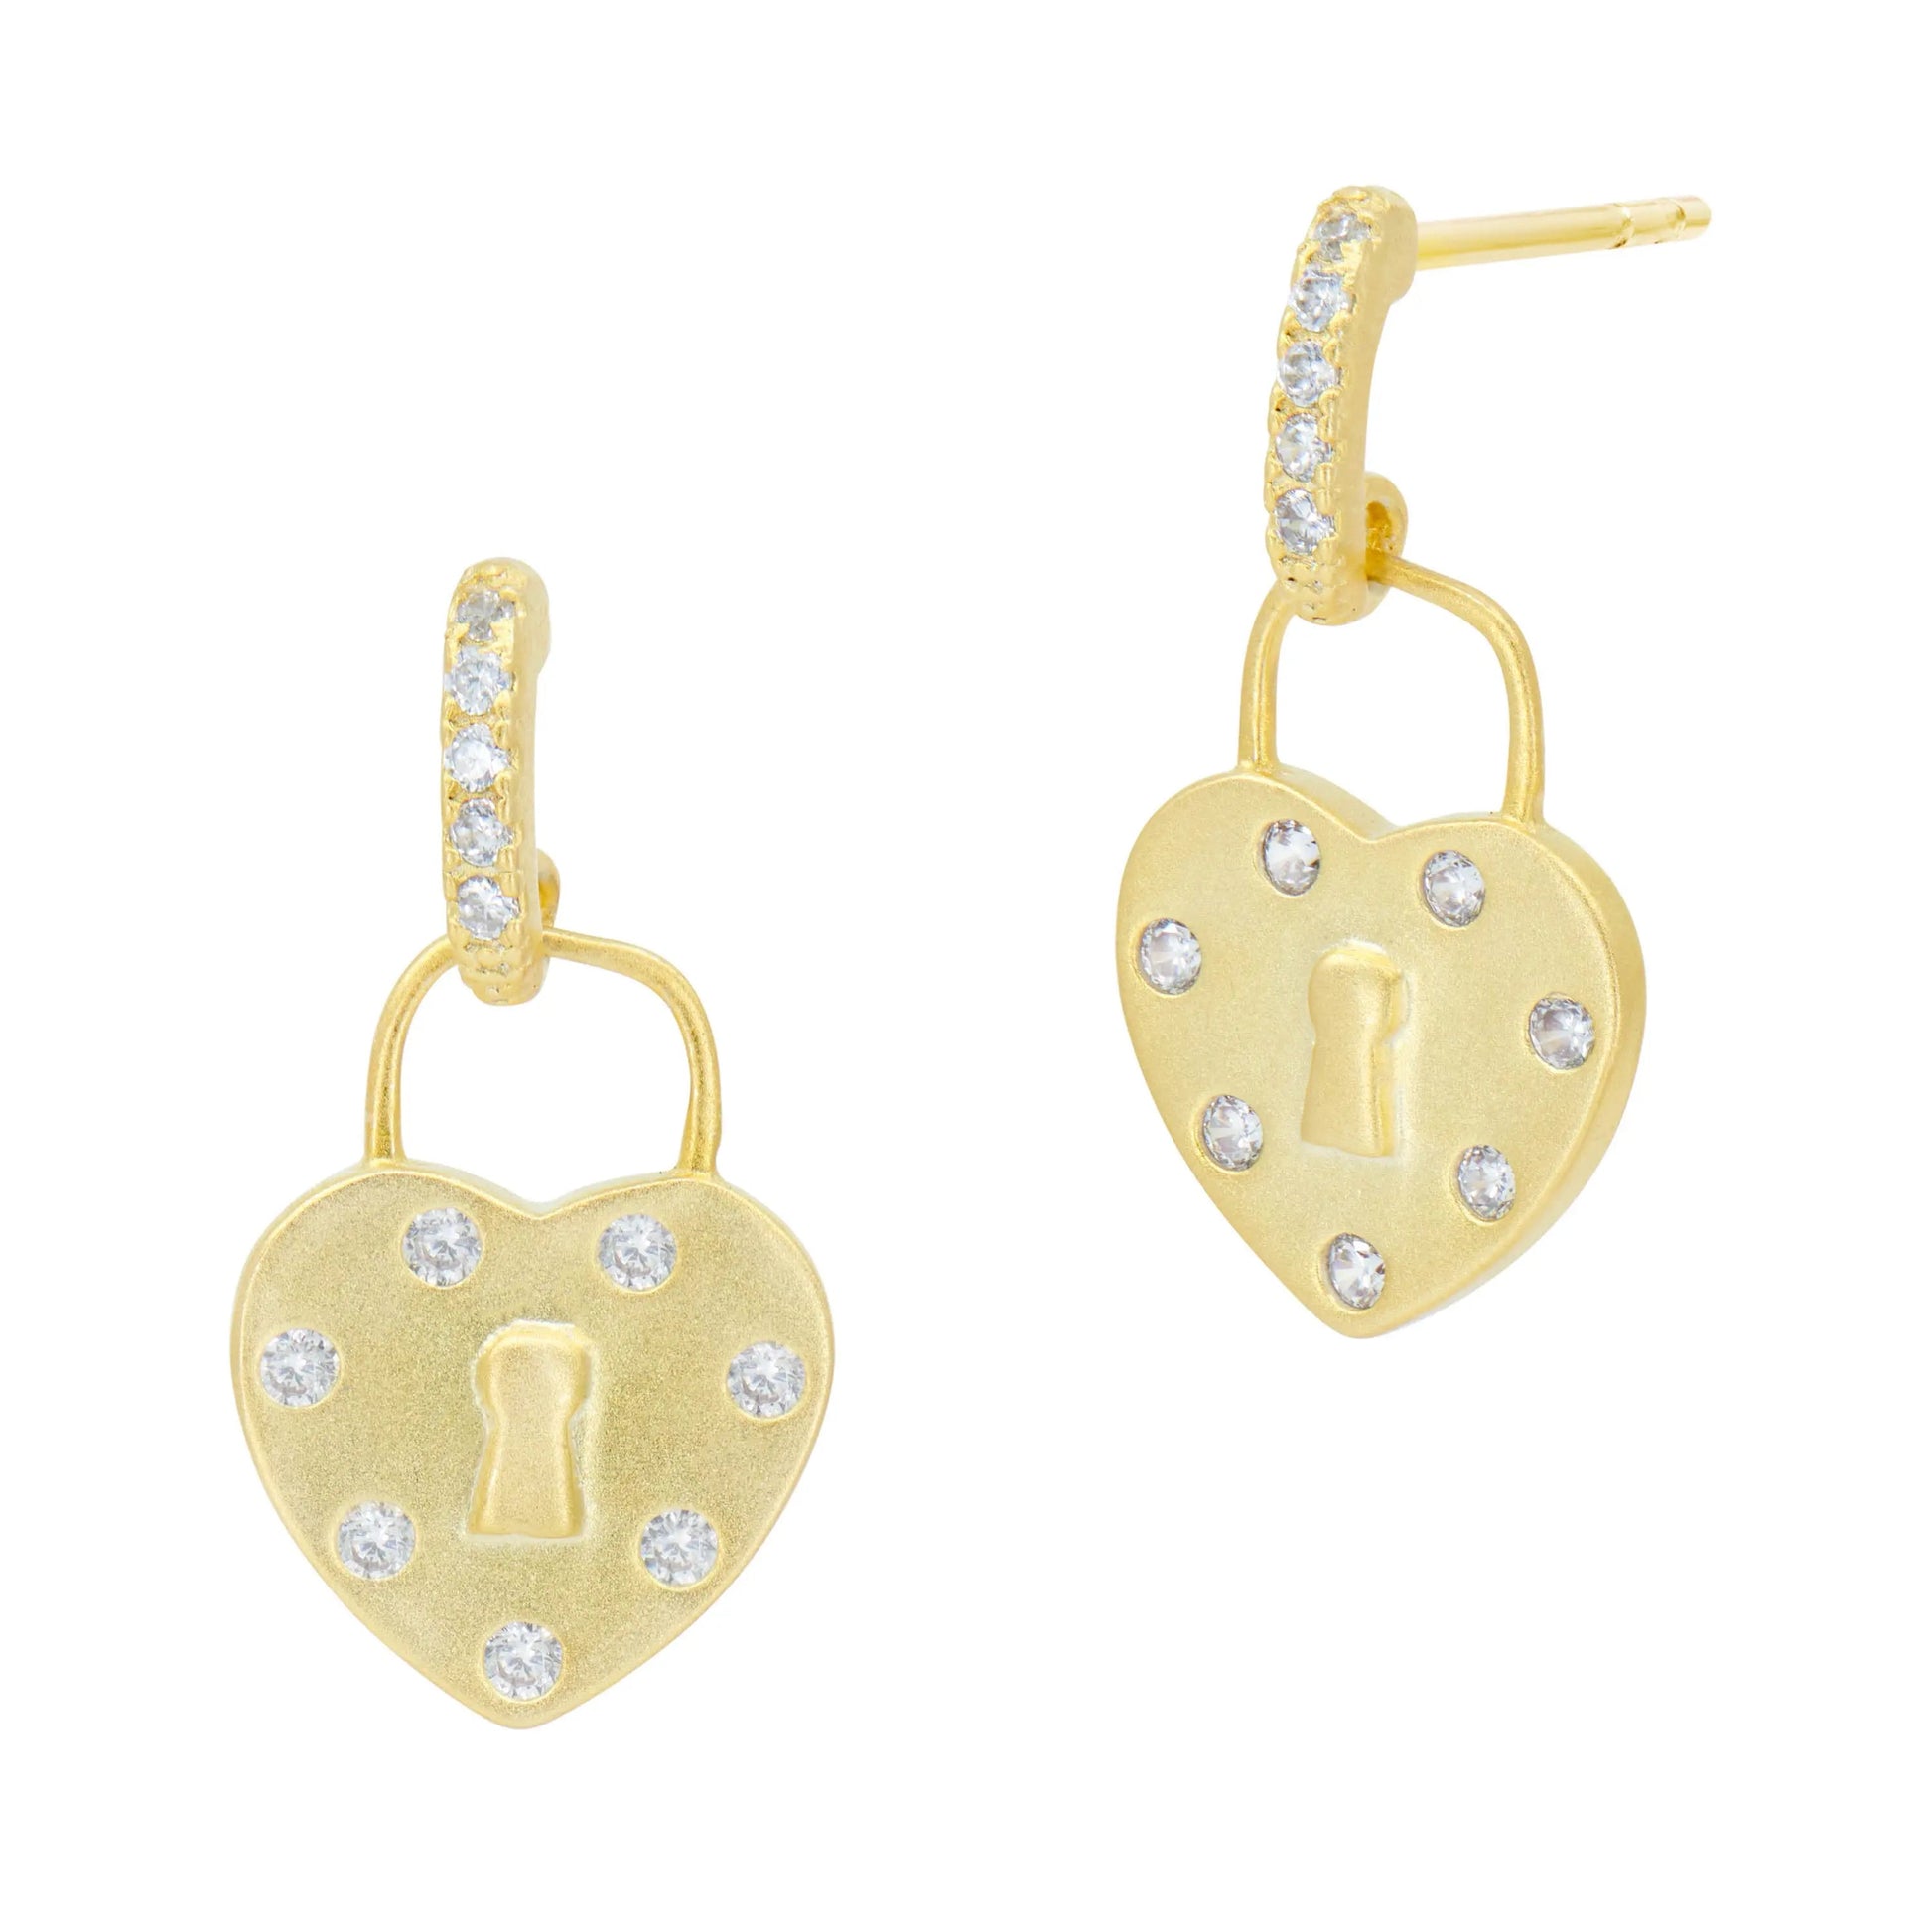  Locked in Love Charm Earrings Valentine's Day Gifts EARRING